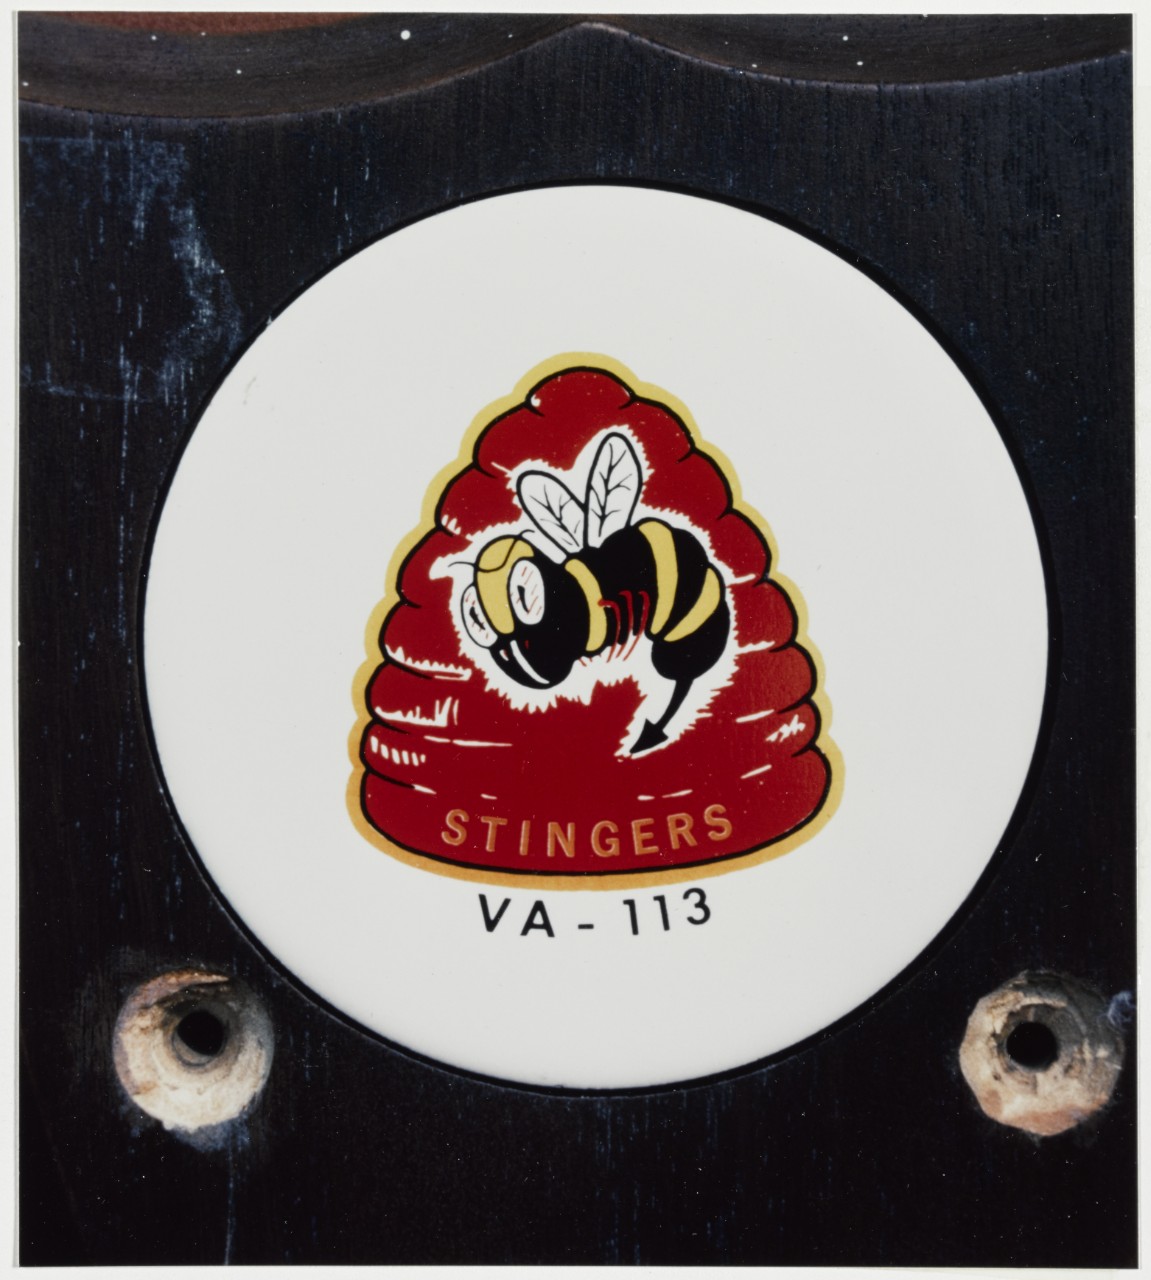 Insignia: Attack Squadron 113 (VA-113) "Stingers".